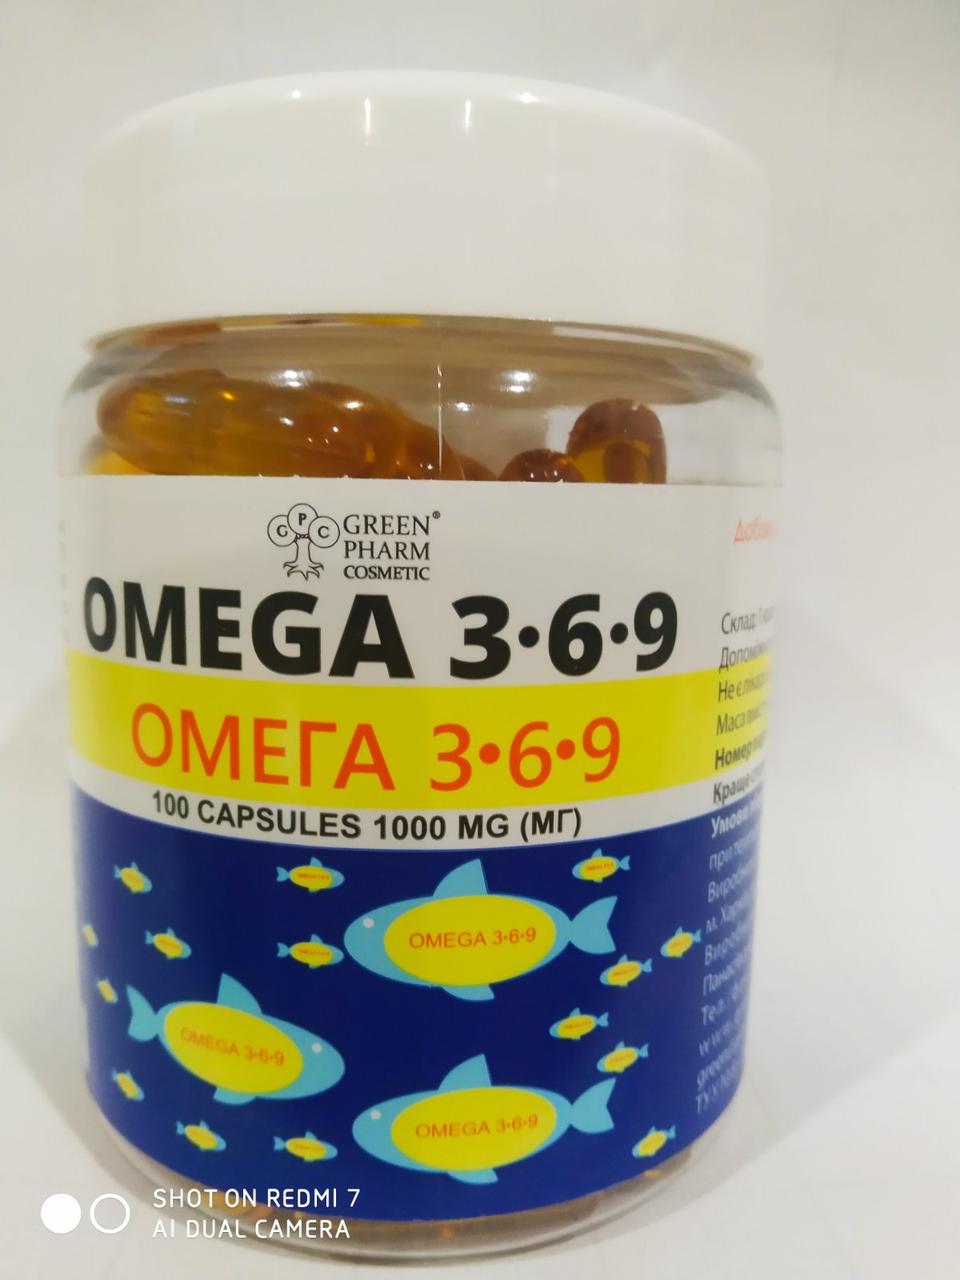 Oмега 3-6-9 рыбий жир с маслом льна 100 капсул Green Pharm Cosmetic